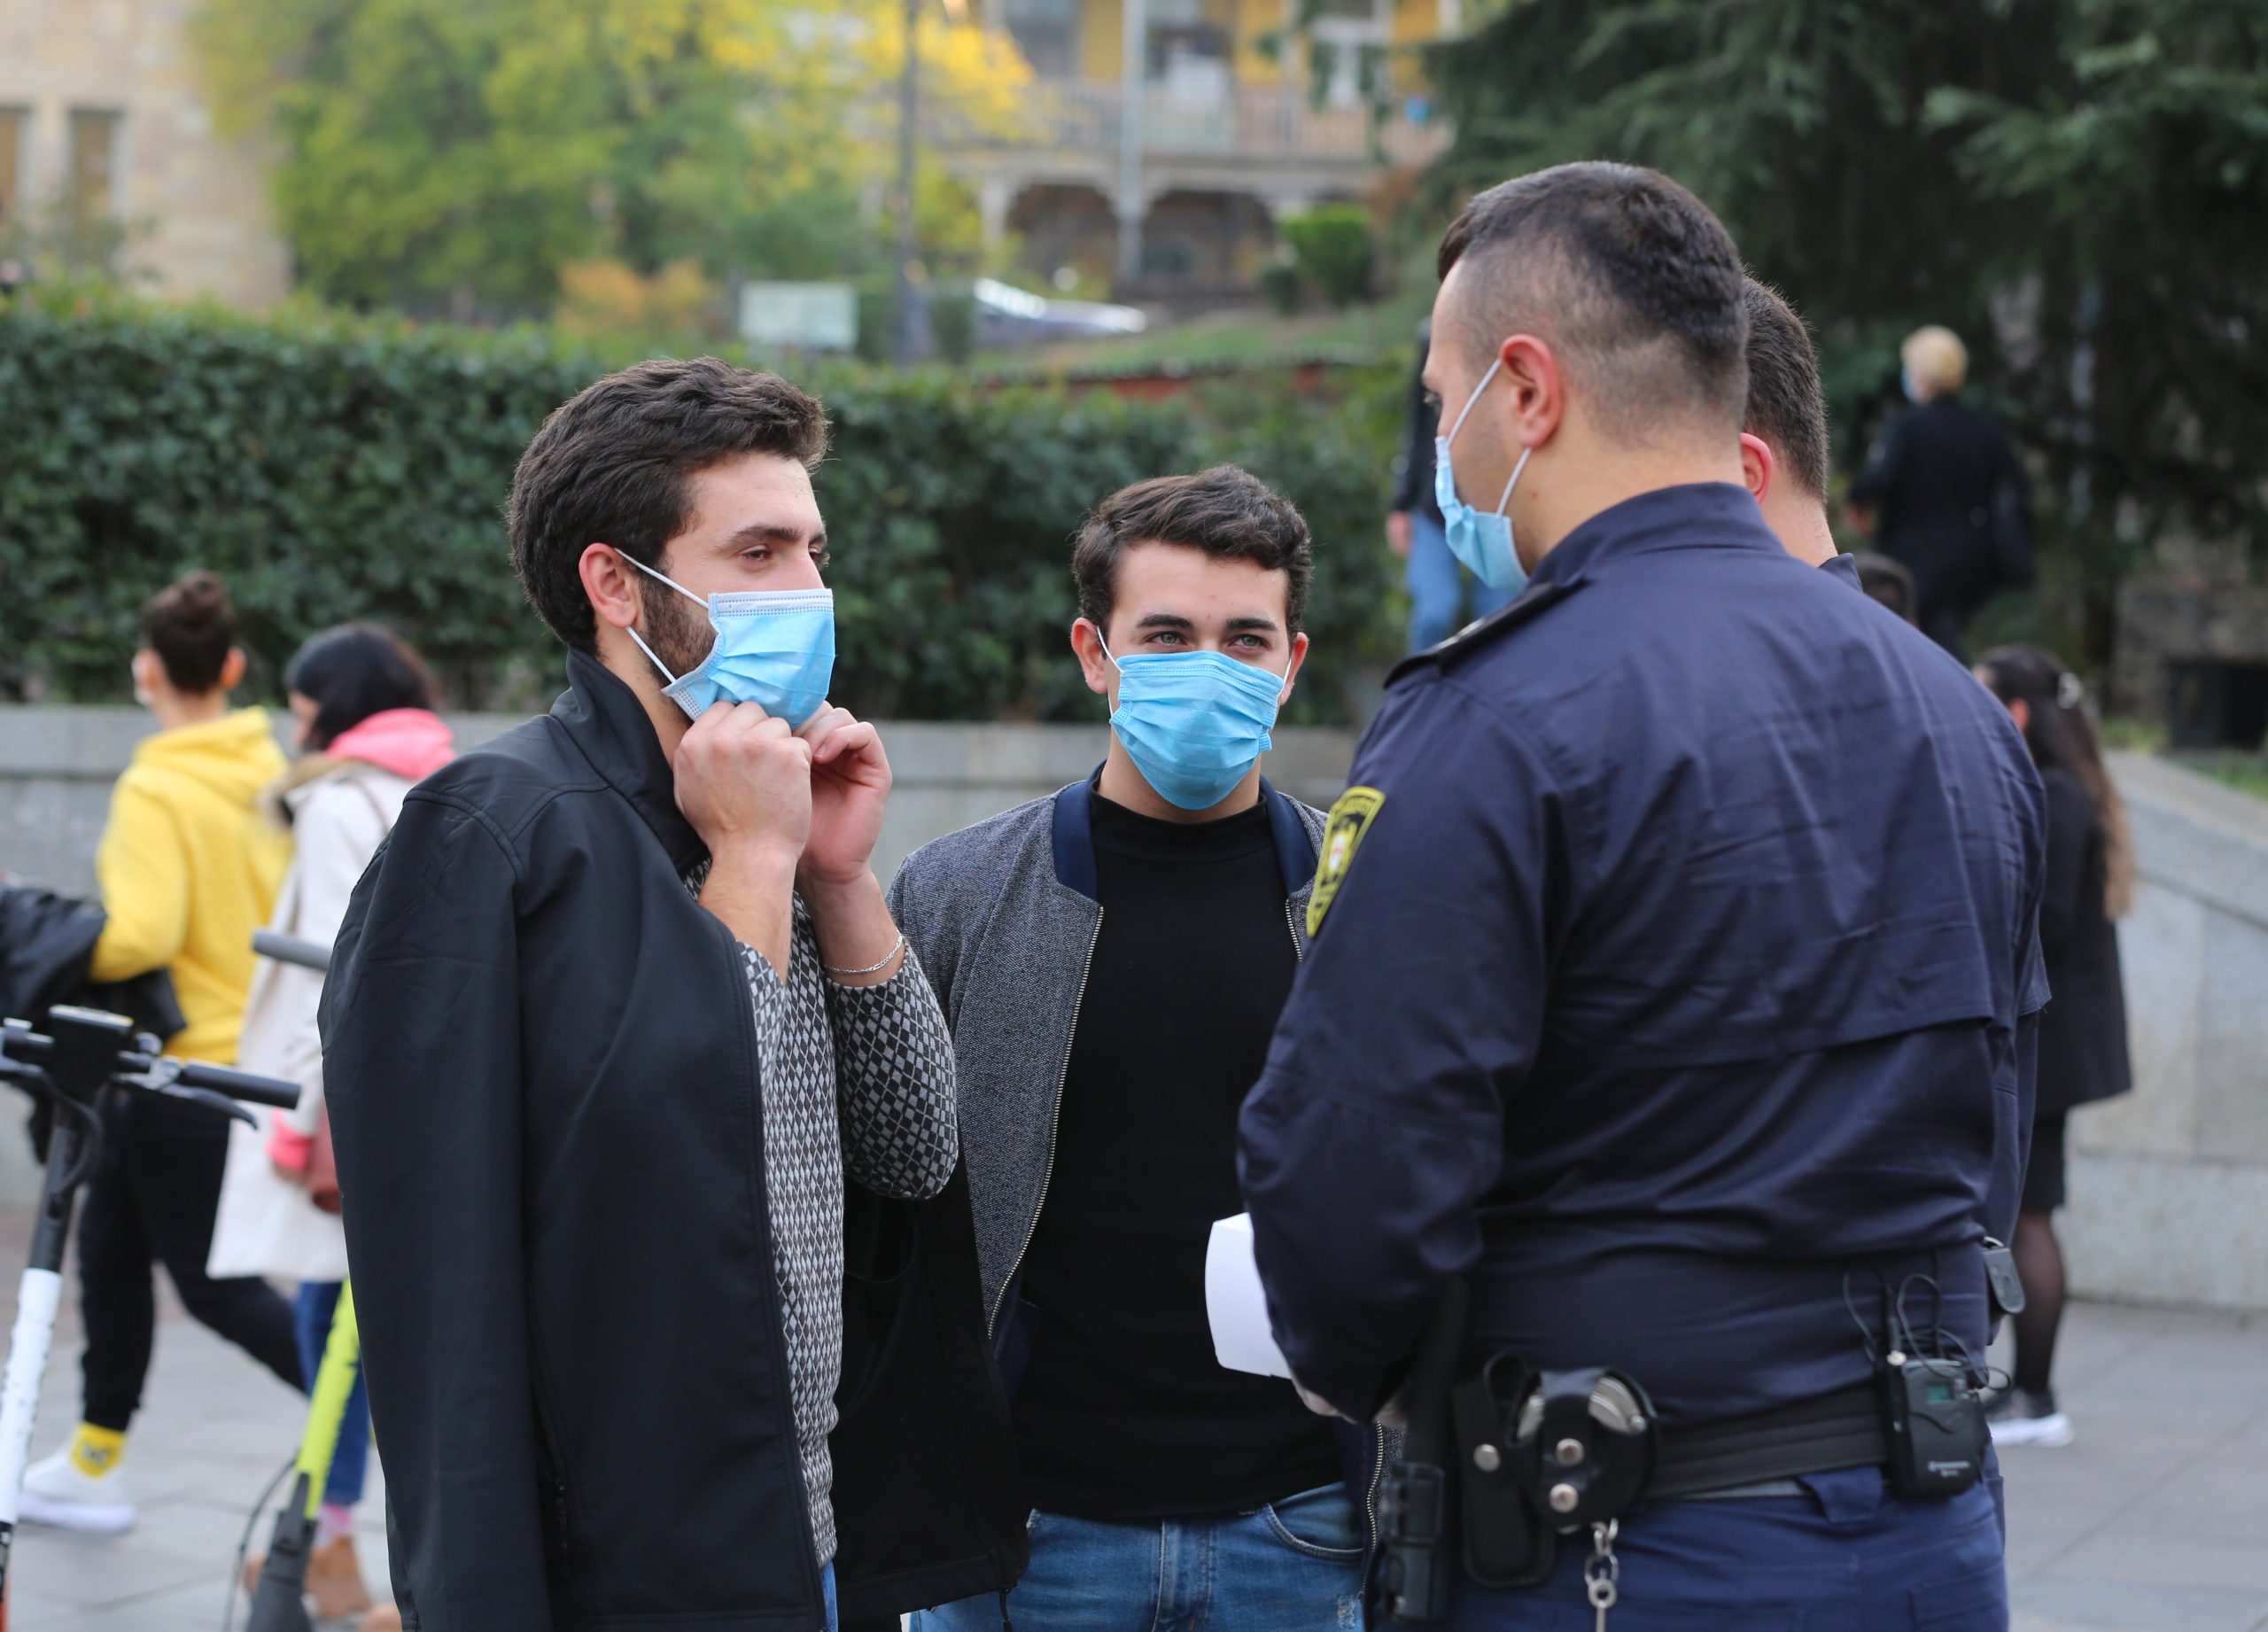 Police Mask scaled медицинские маски медицинские маски